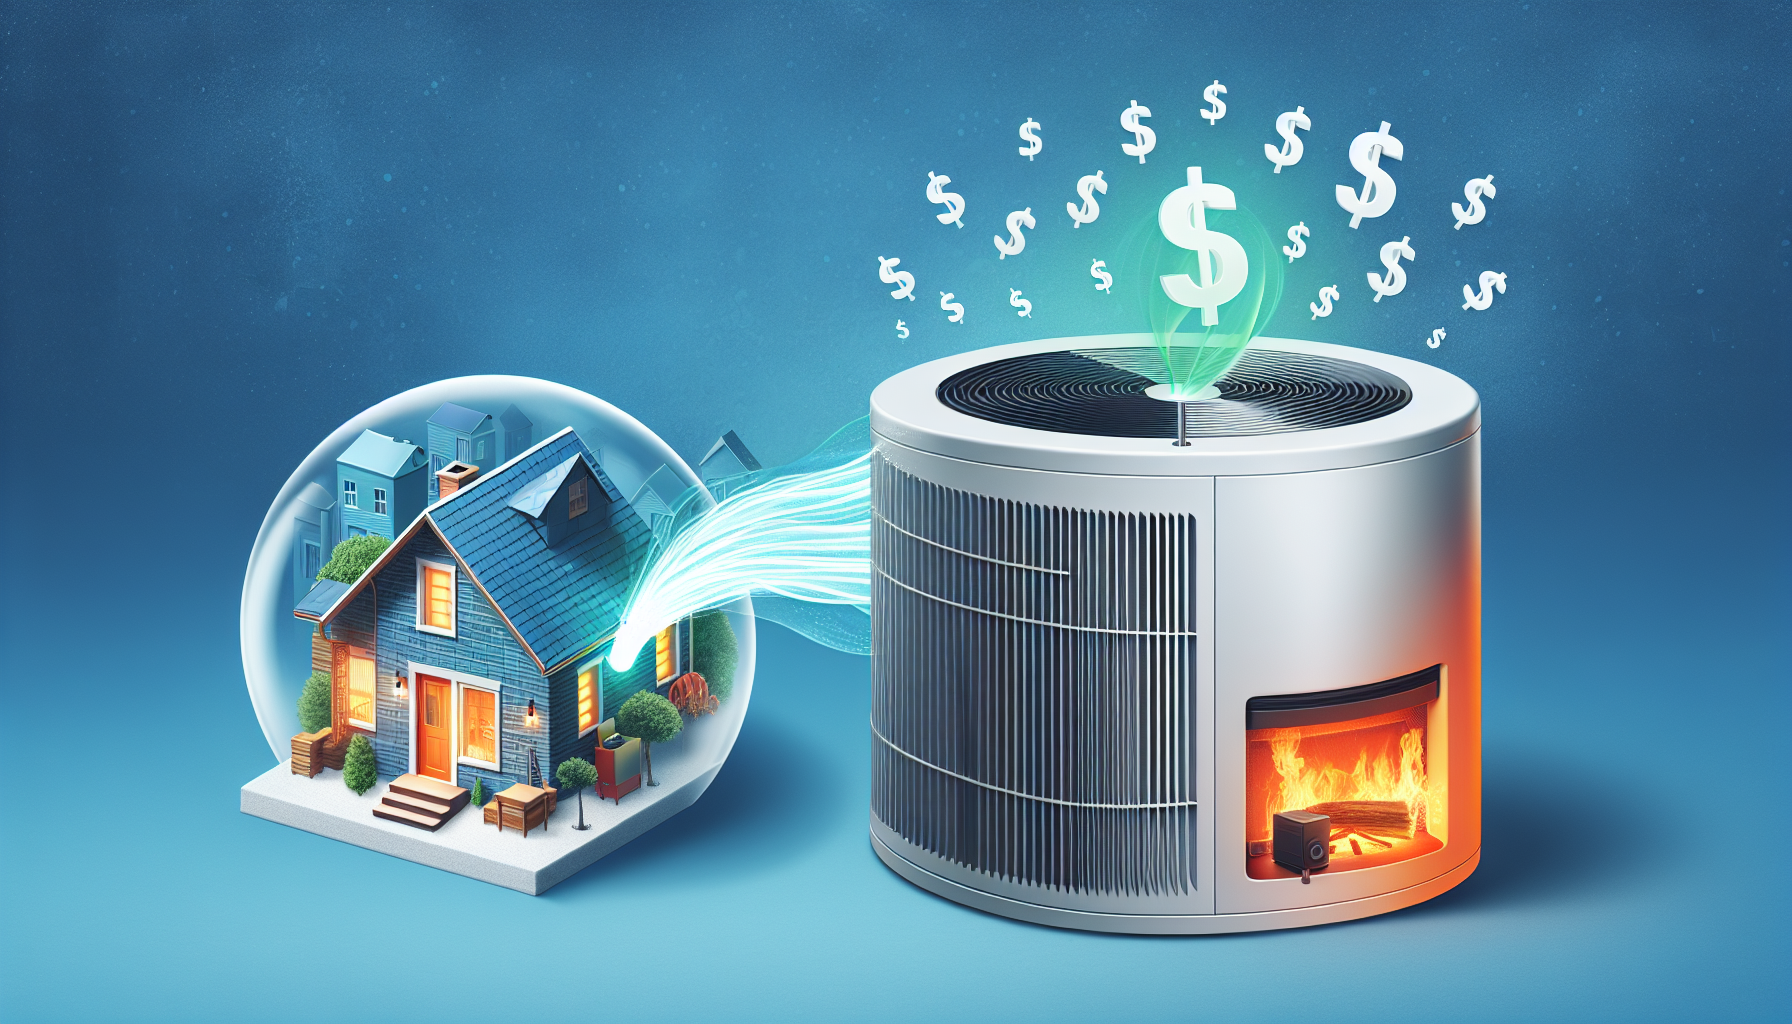 Illustration of energy efficiency in heat pumps